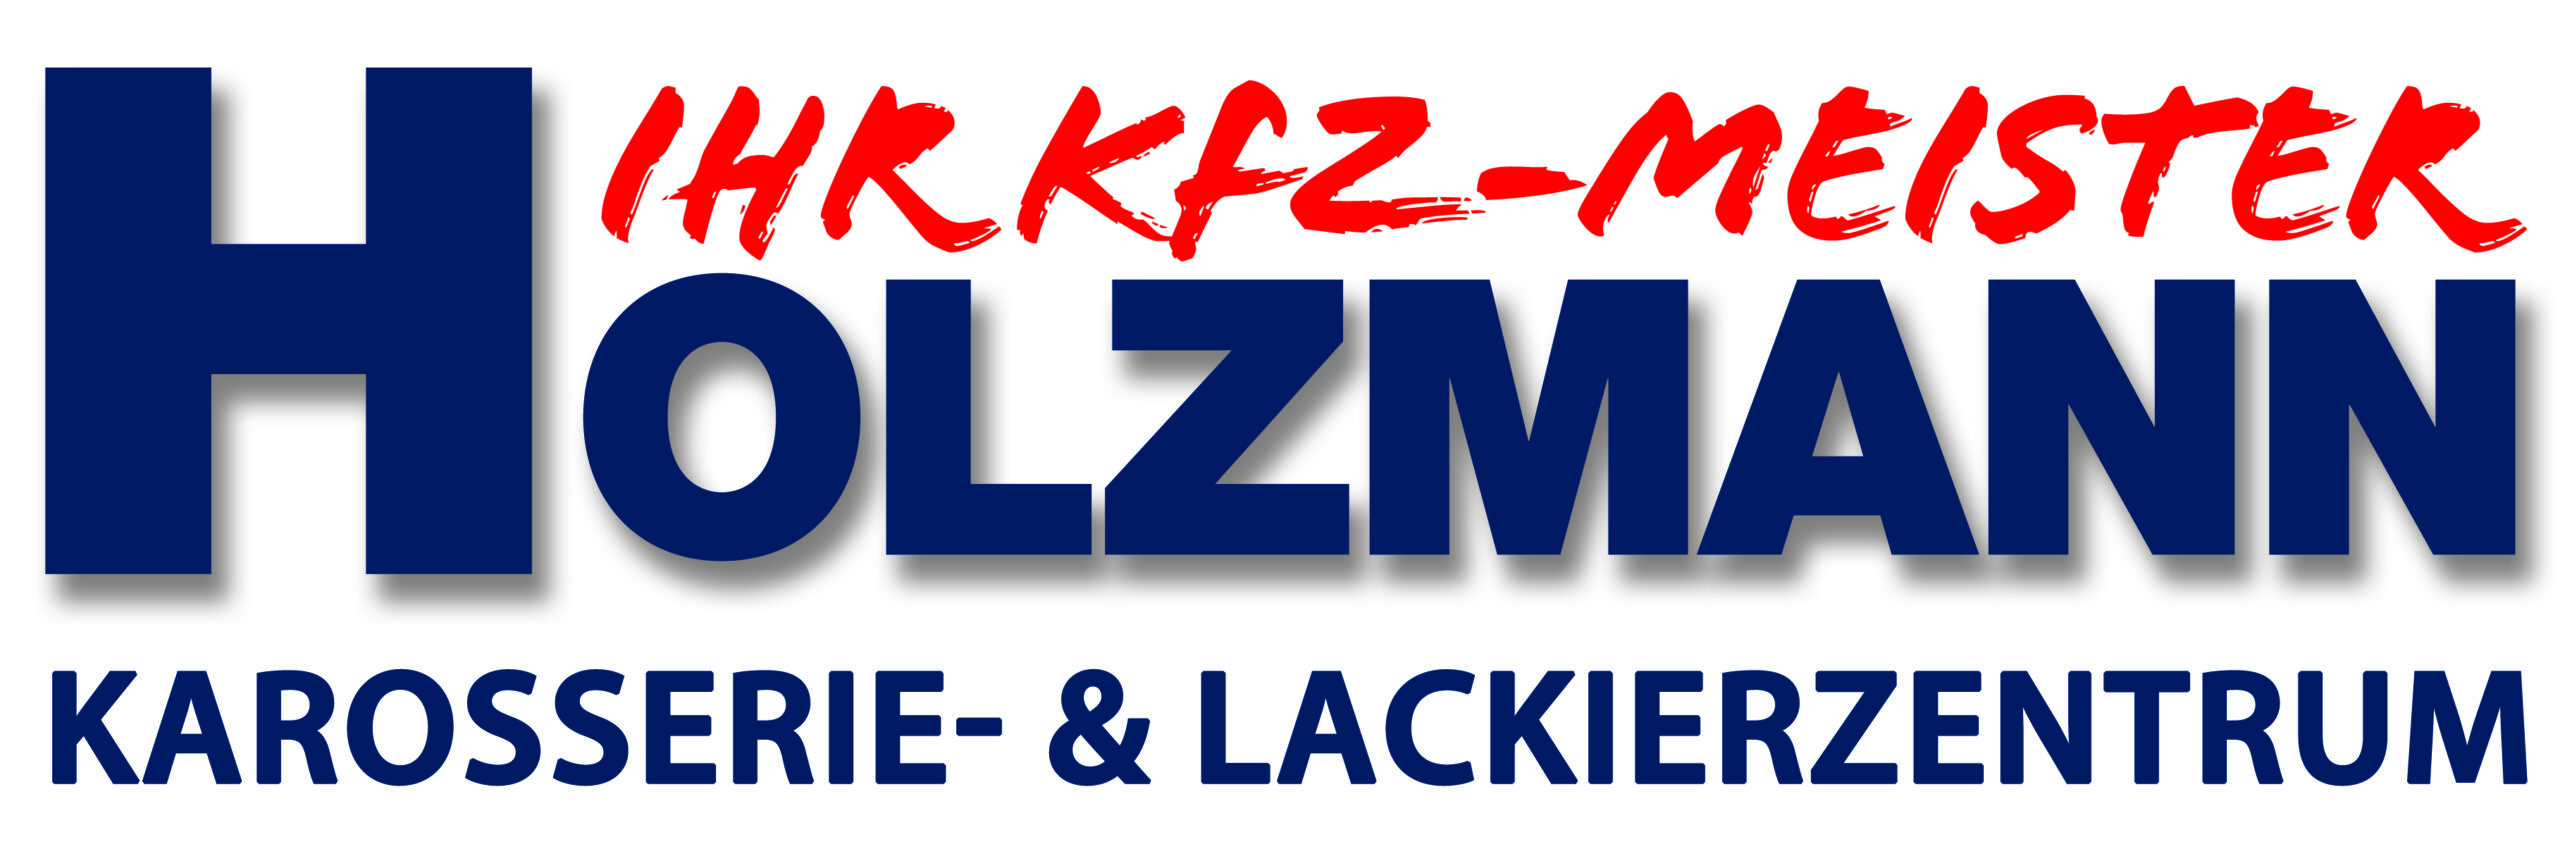 KFZ-Holzmann